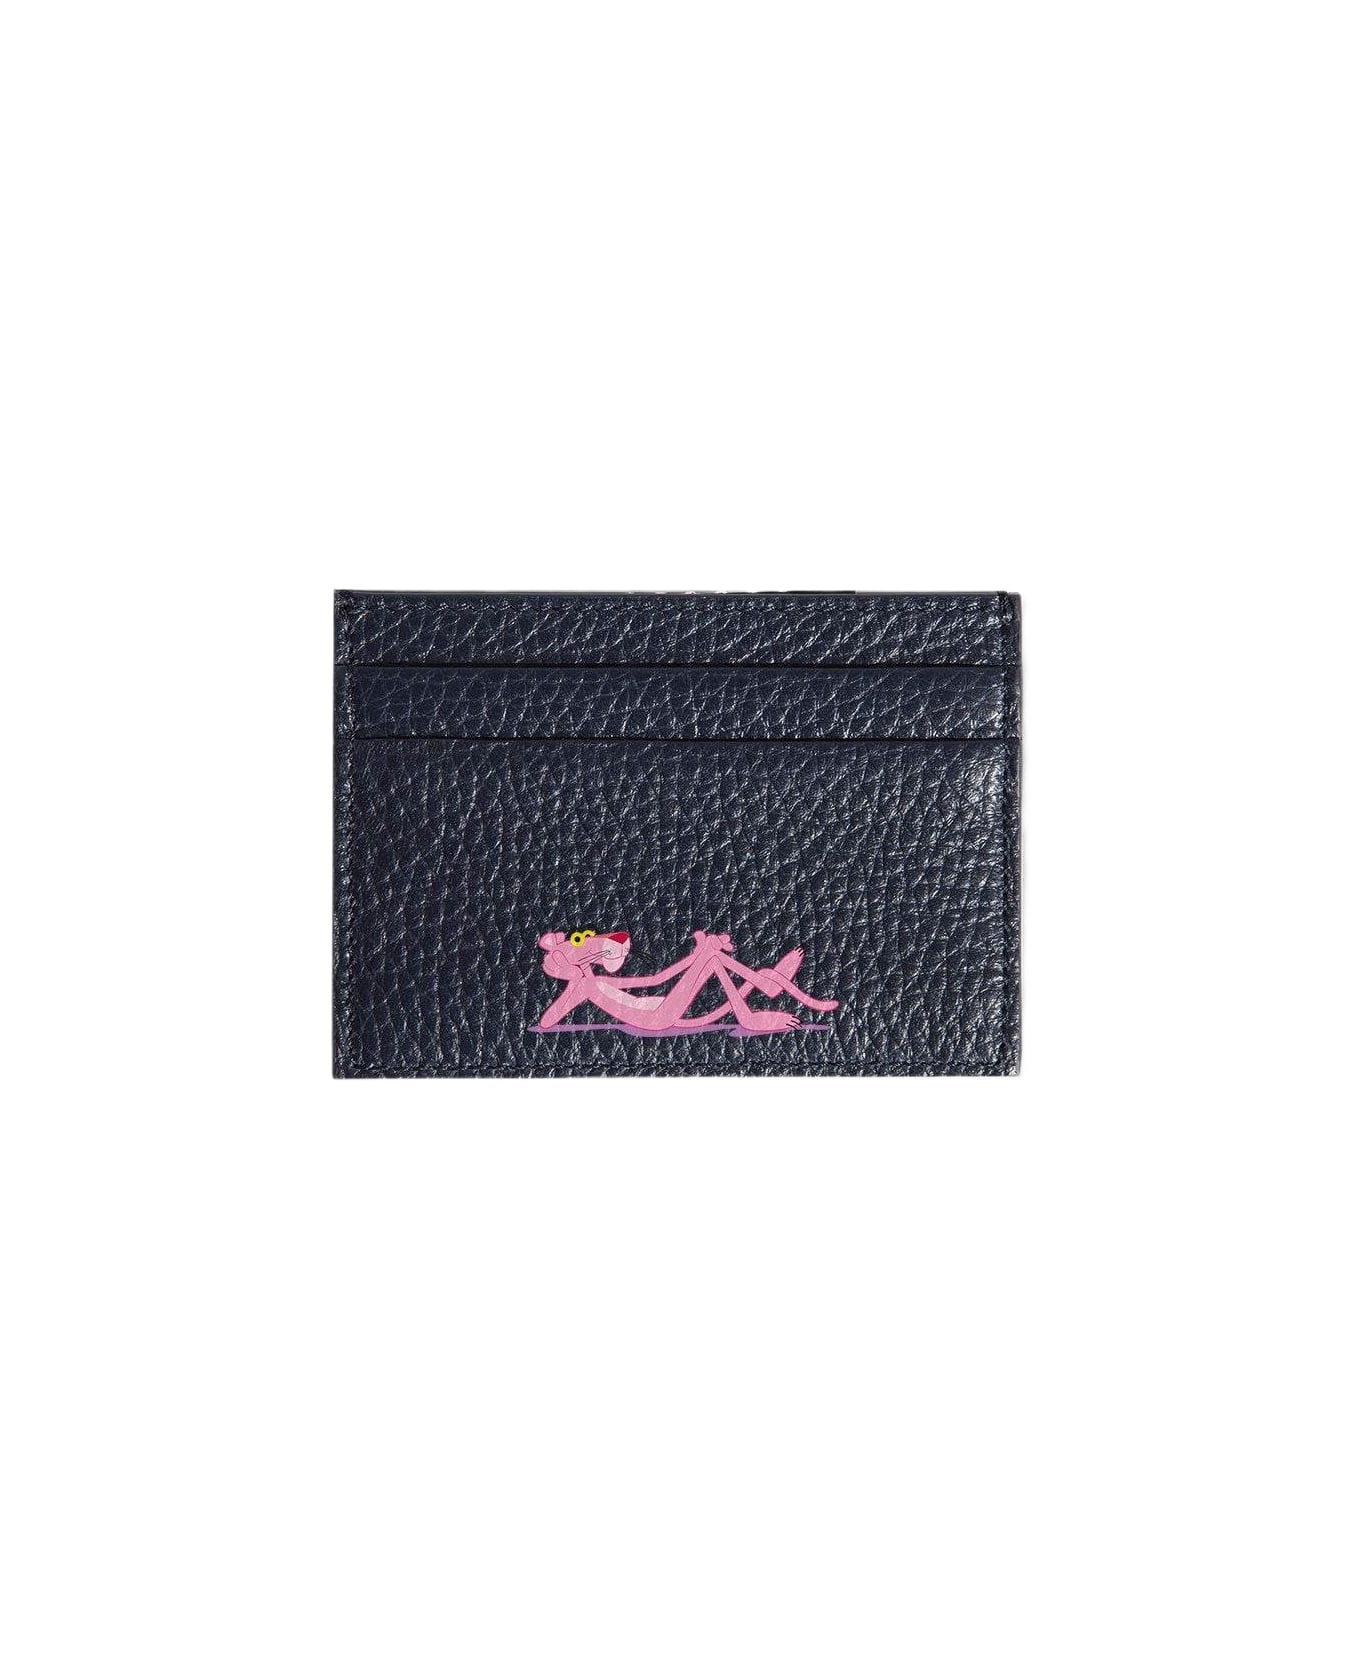 Larusmiani Card Holder 'pink Panther' Wallet - Navy 財布